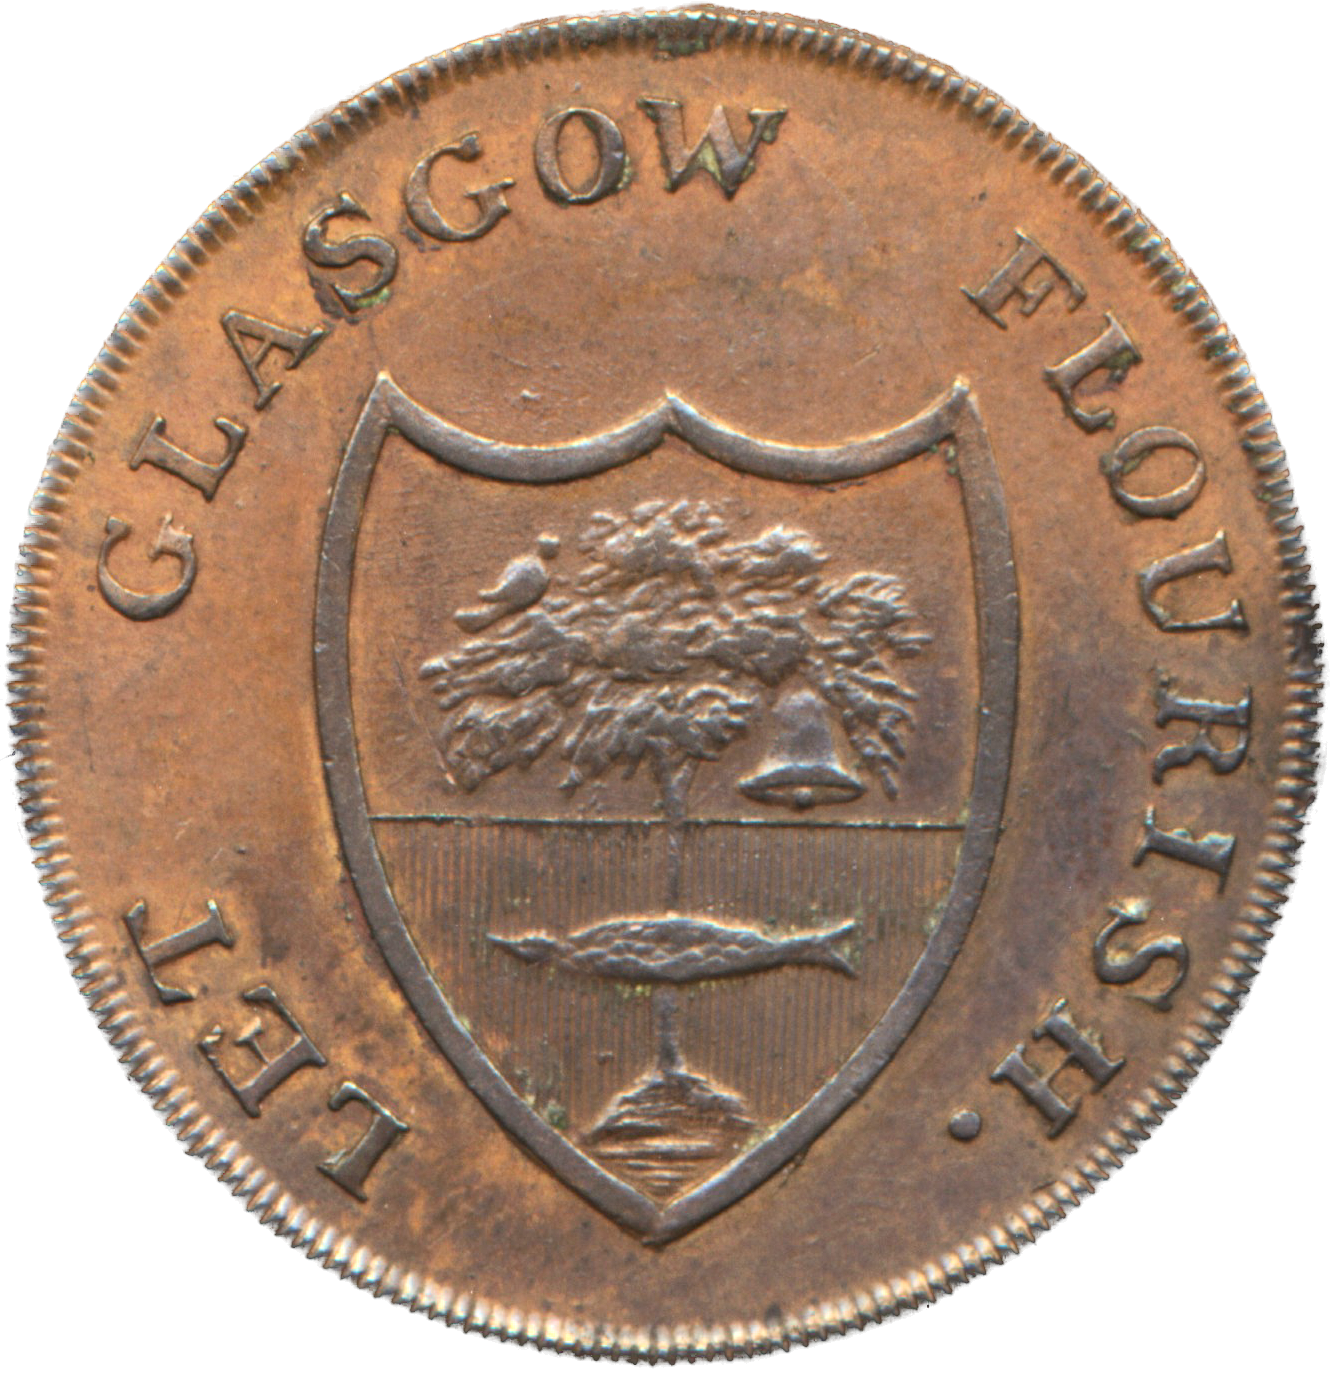 Lanarkshire D&H 3a Glasgow 1791 Conder Halfpenny Rare